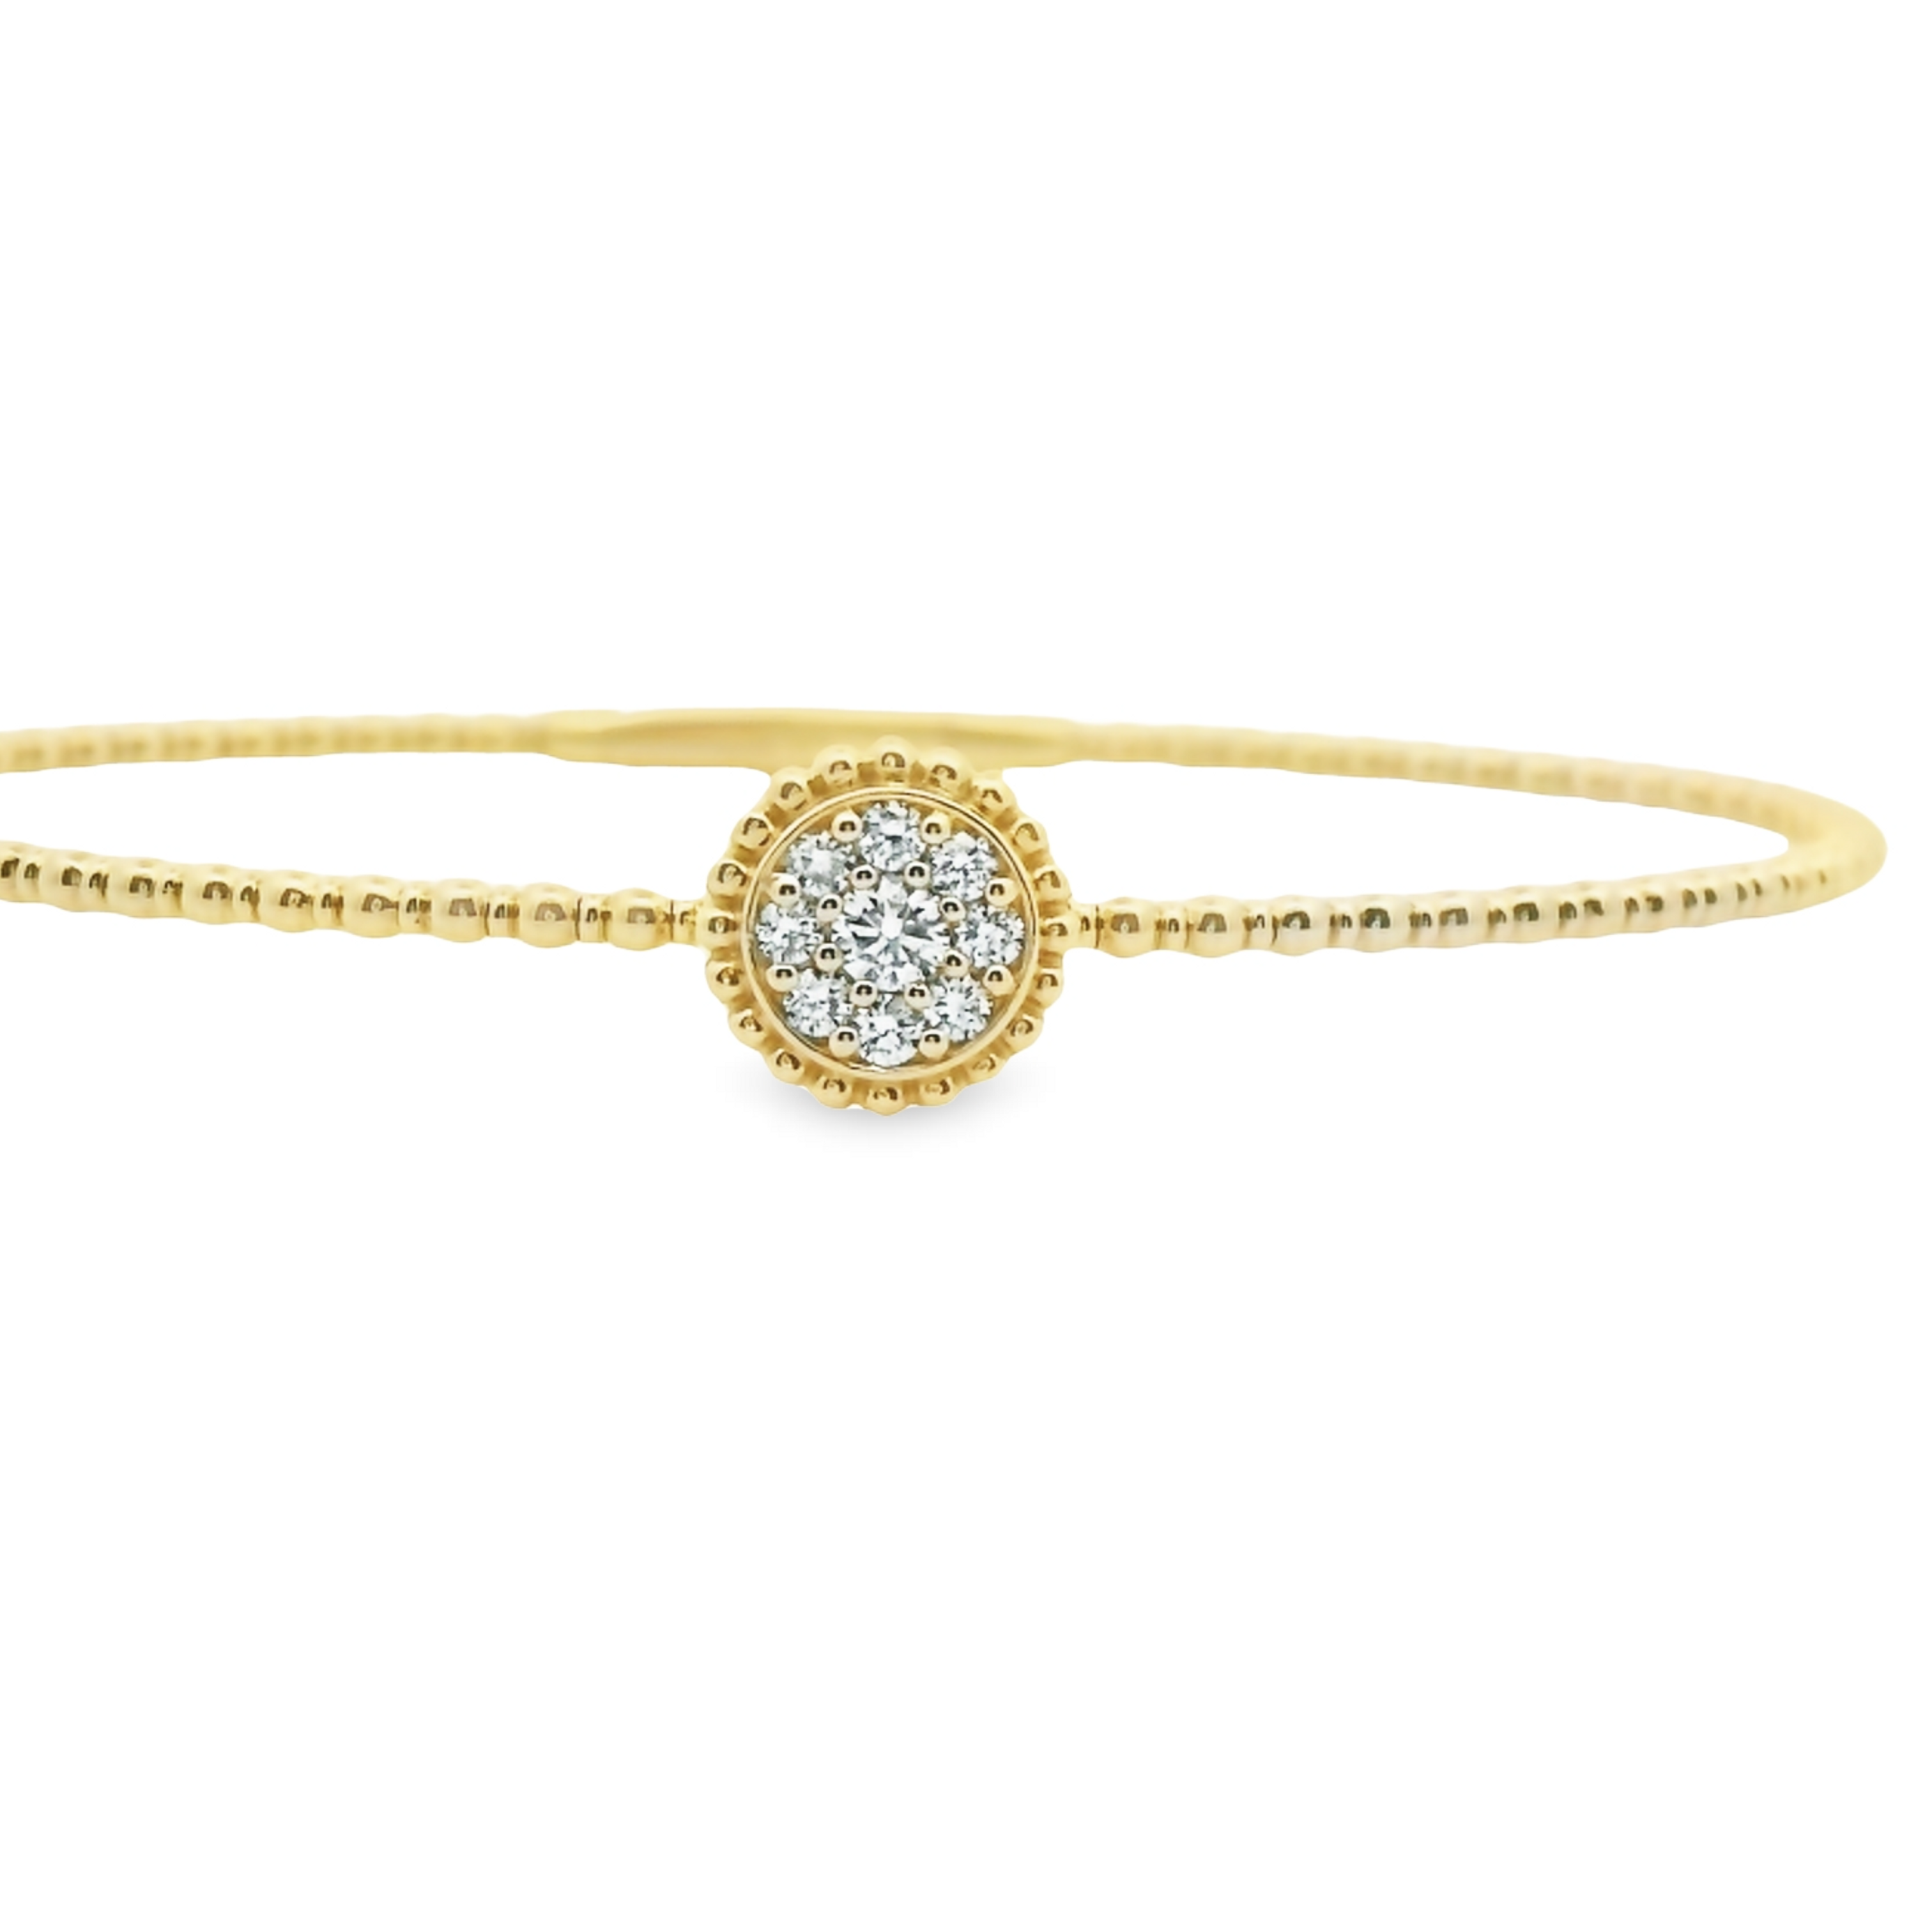 LOVE PEACE single diamond bracelet, yellow gold